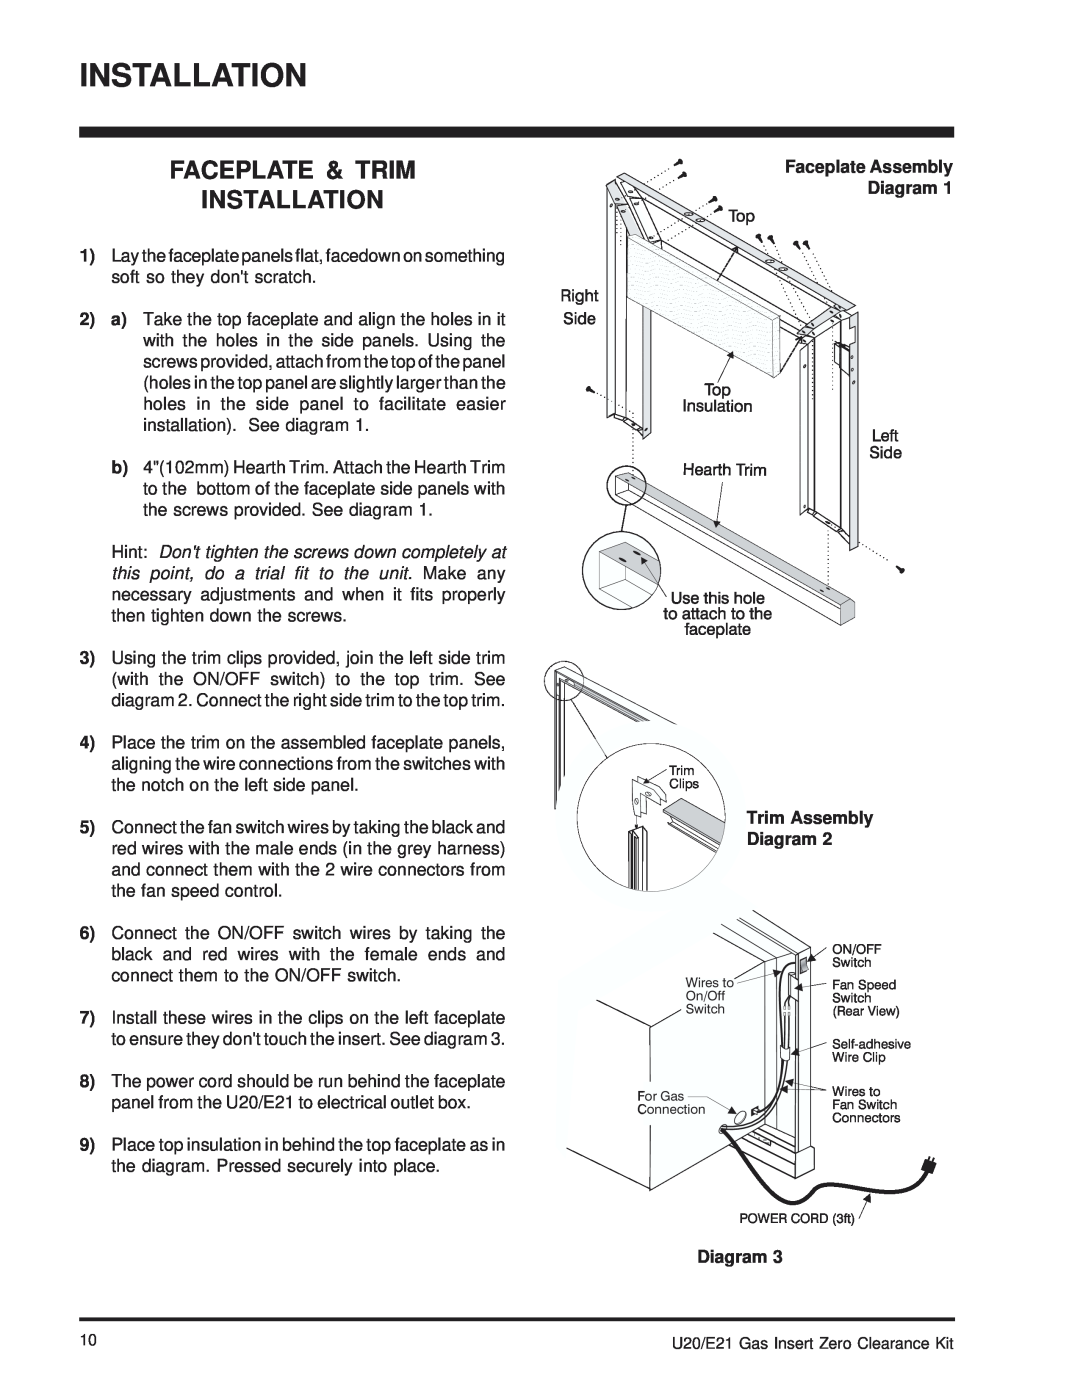 Regency U20, E21 installation manual Faceplate & Trim Installation, Faceplate Assembly Diagram, Trim Assembly Diagram 